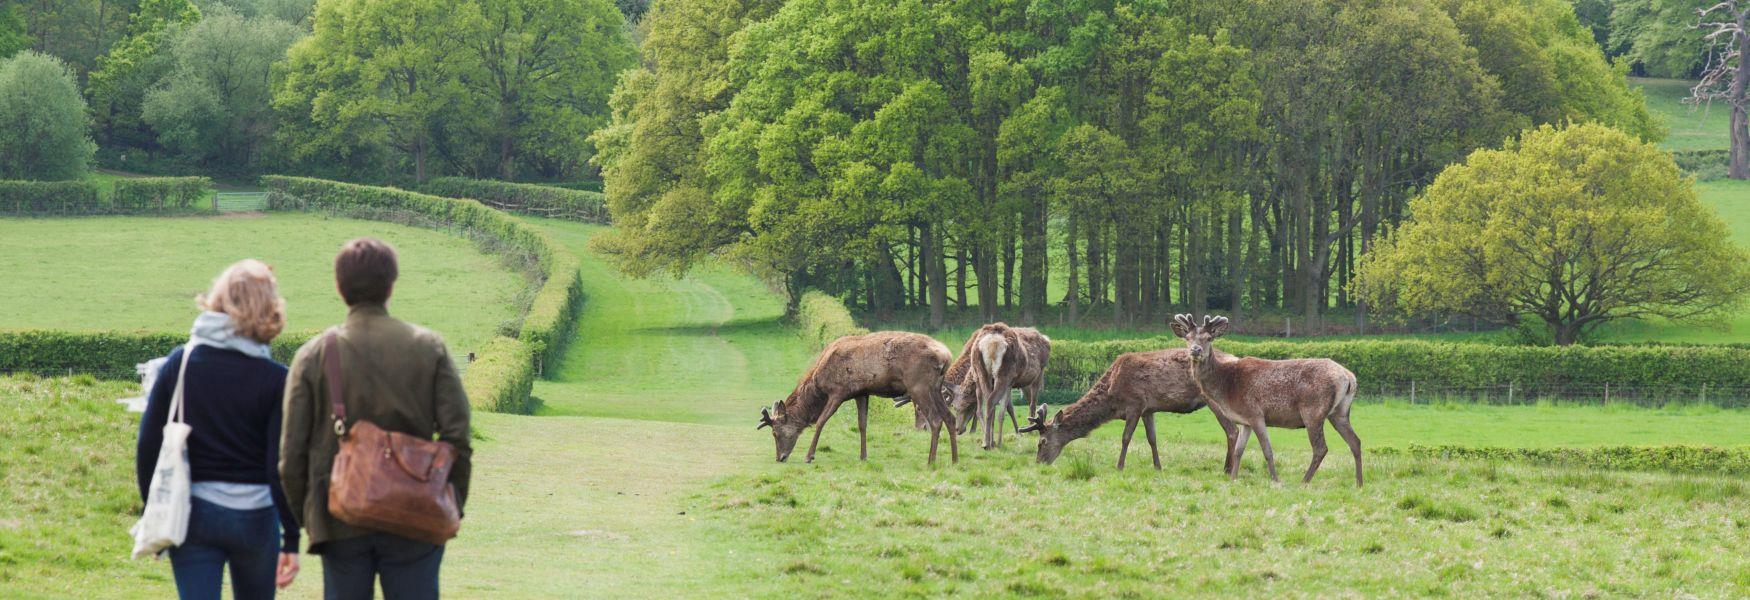 Walkers and deer in Windsor Great Park